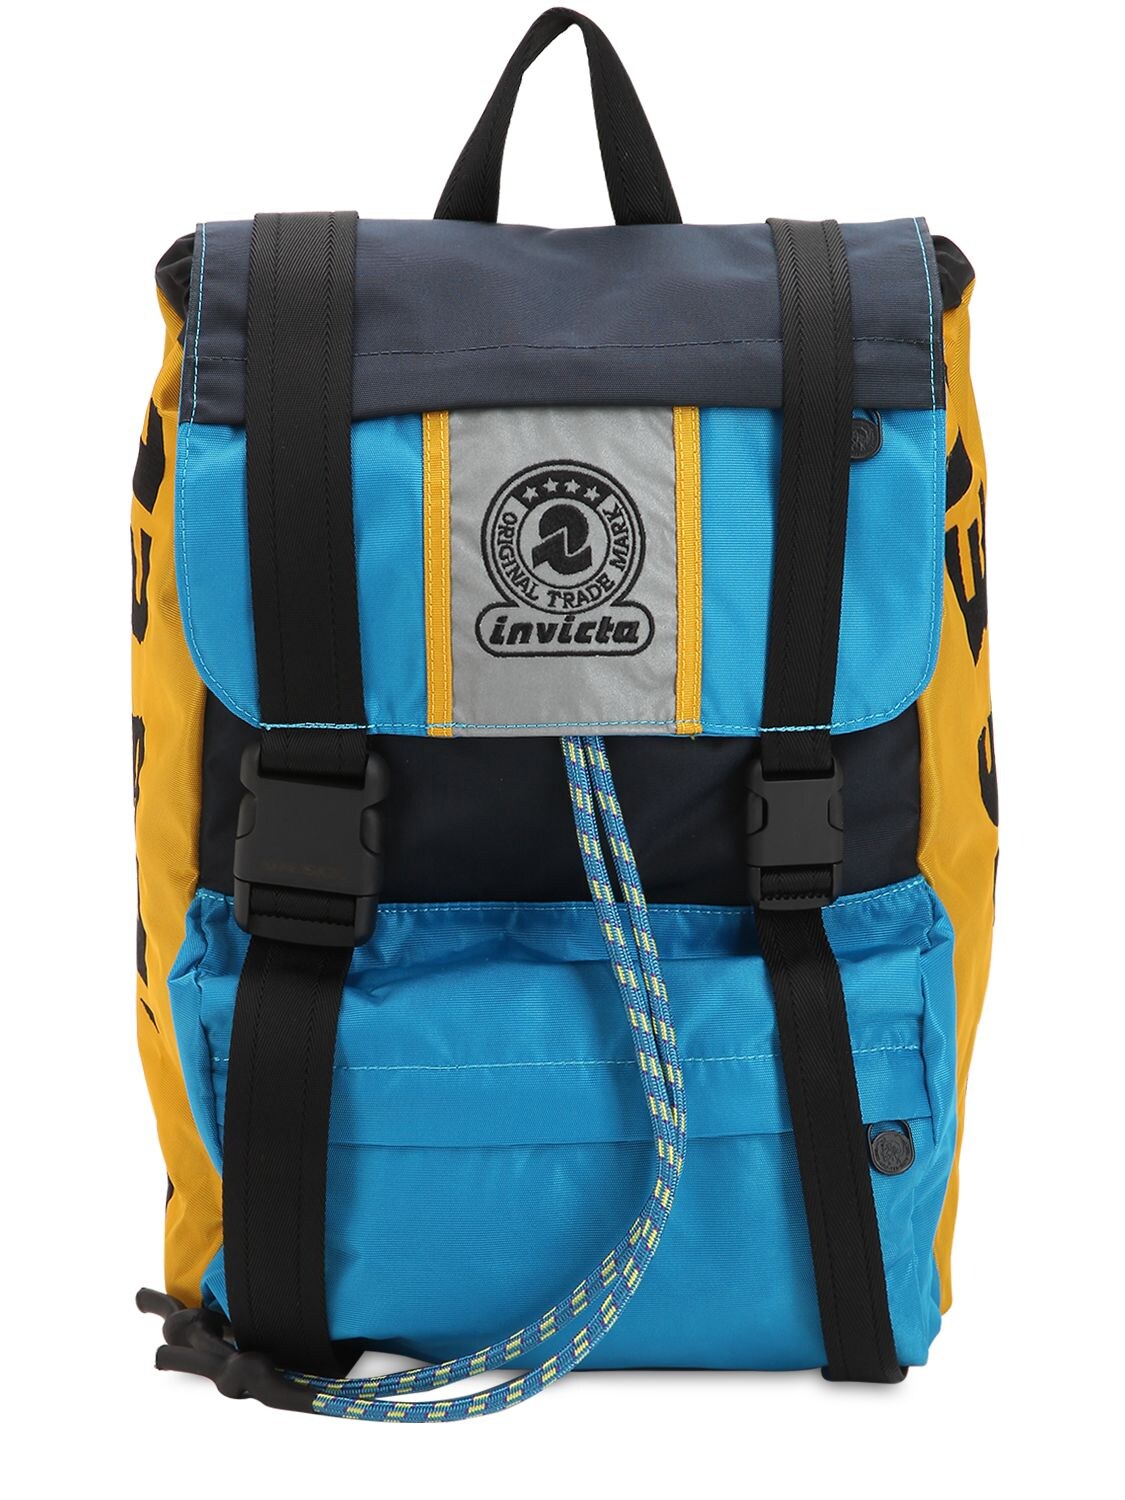 Diesel Invicta Nylon Canvas Backpack In Multicolor